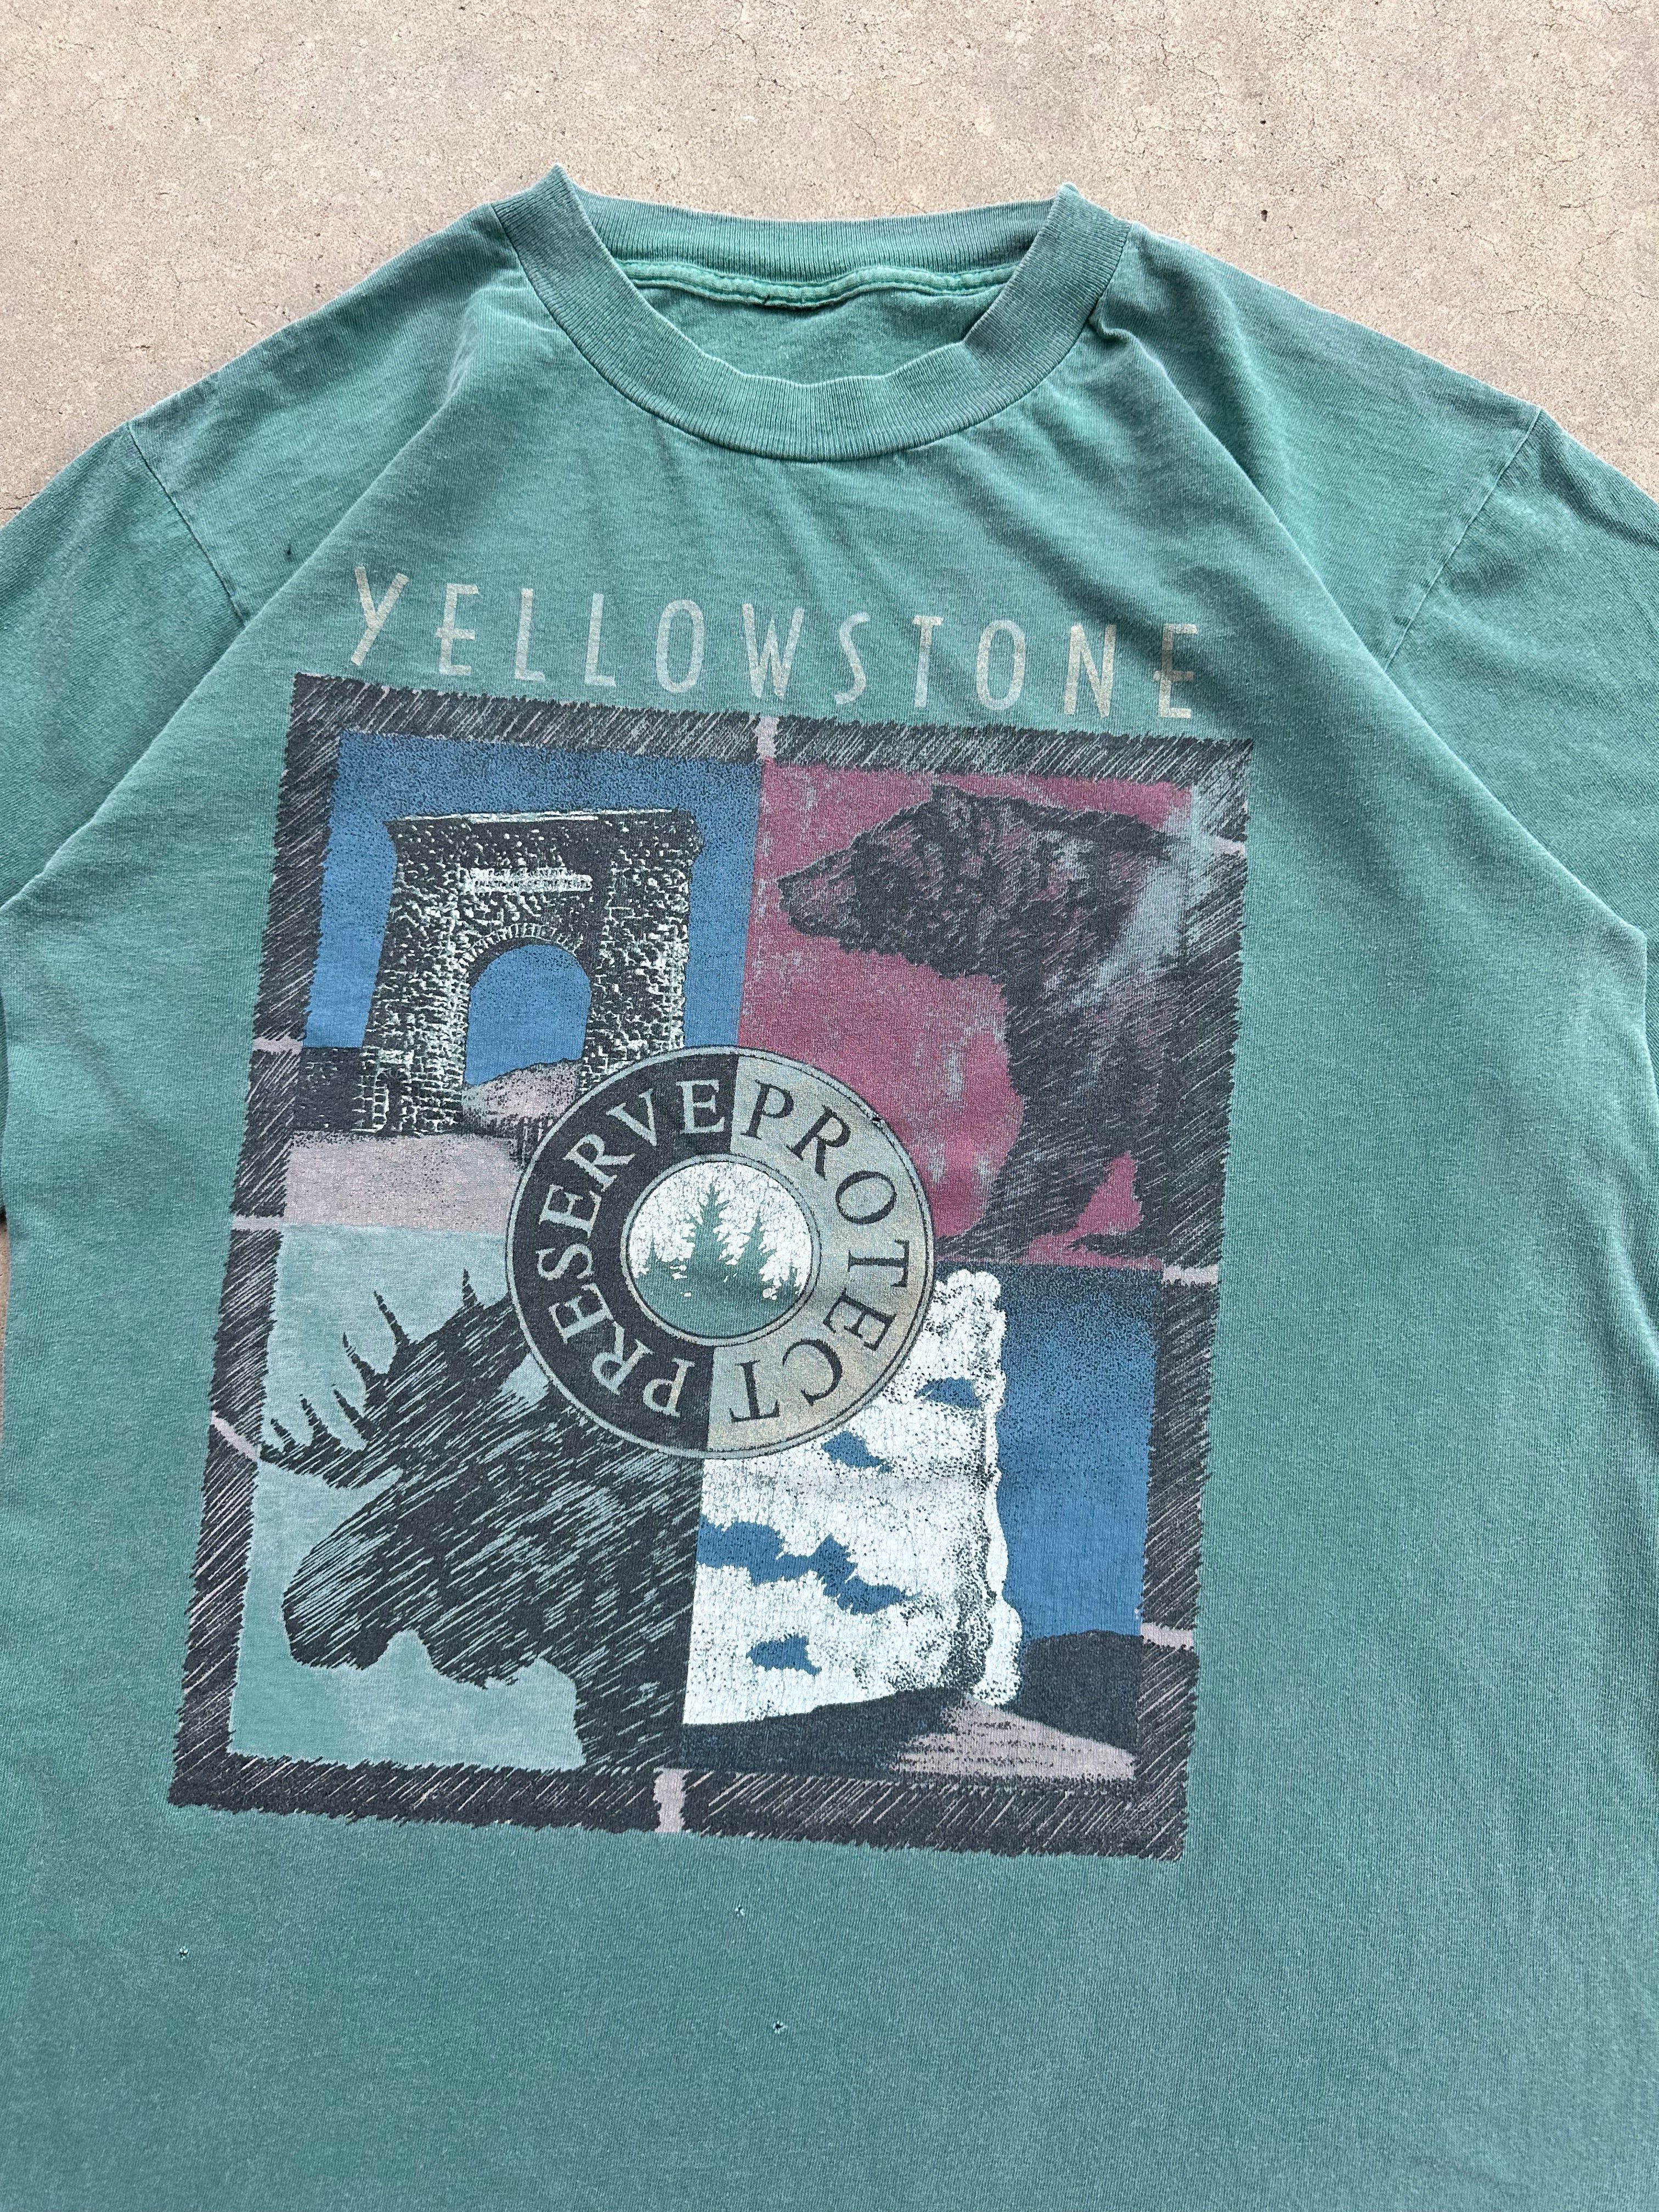 1990’s Yellowstone T-Shirt (M)